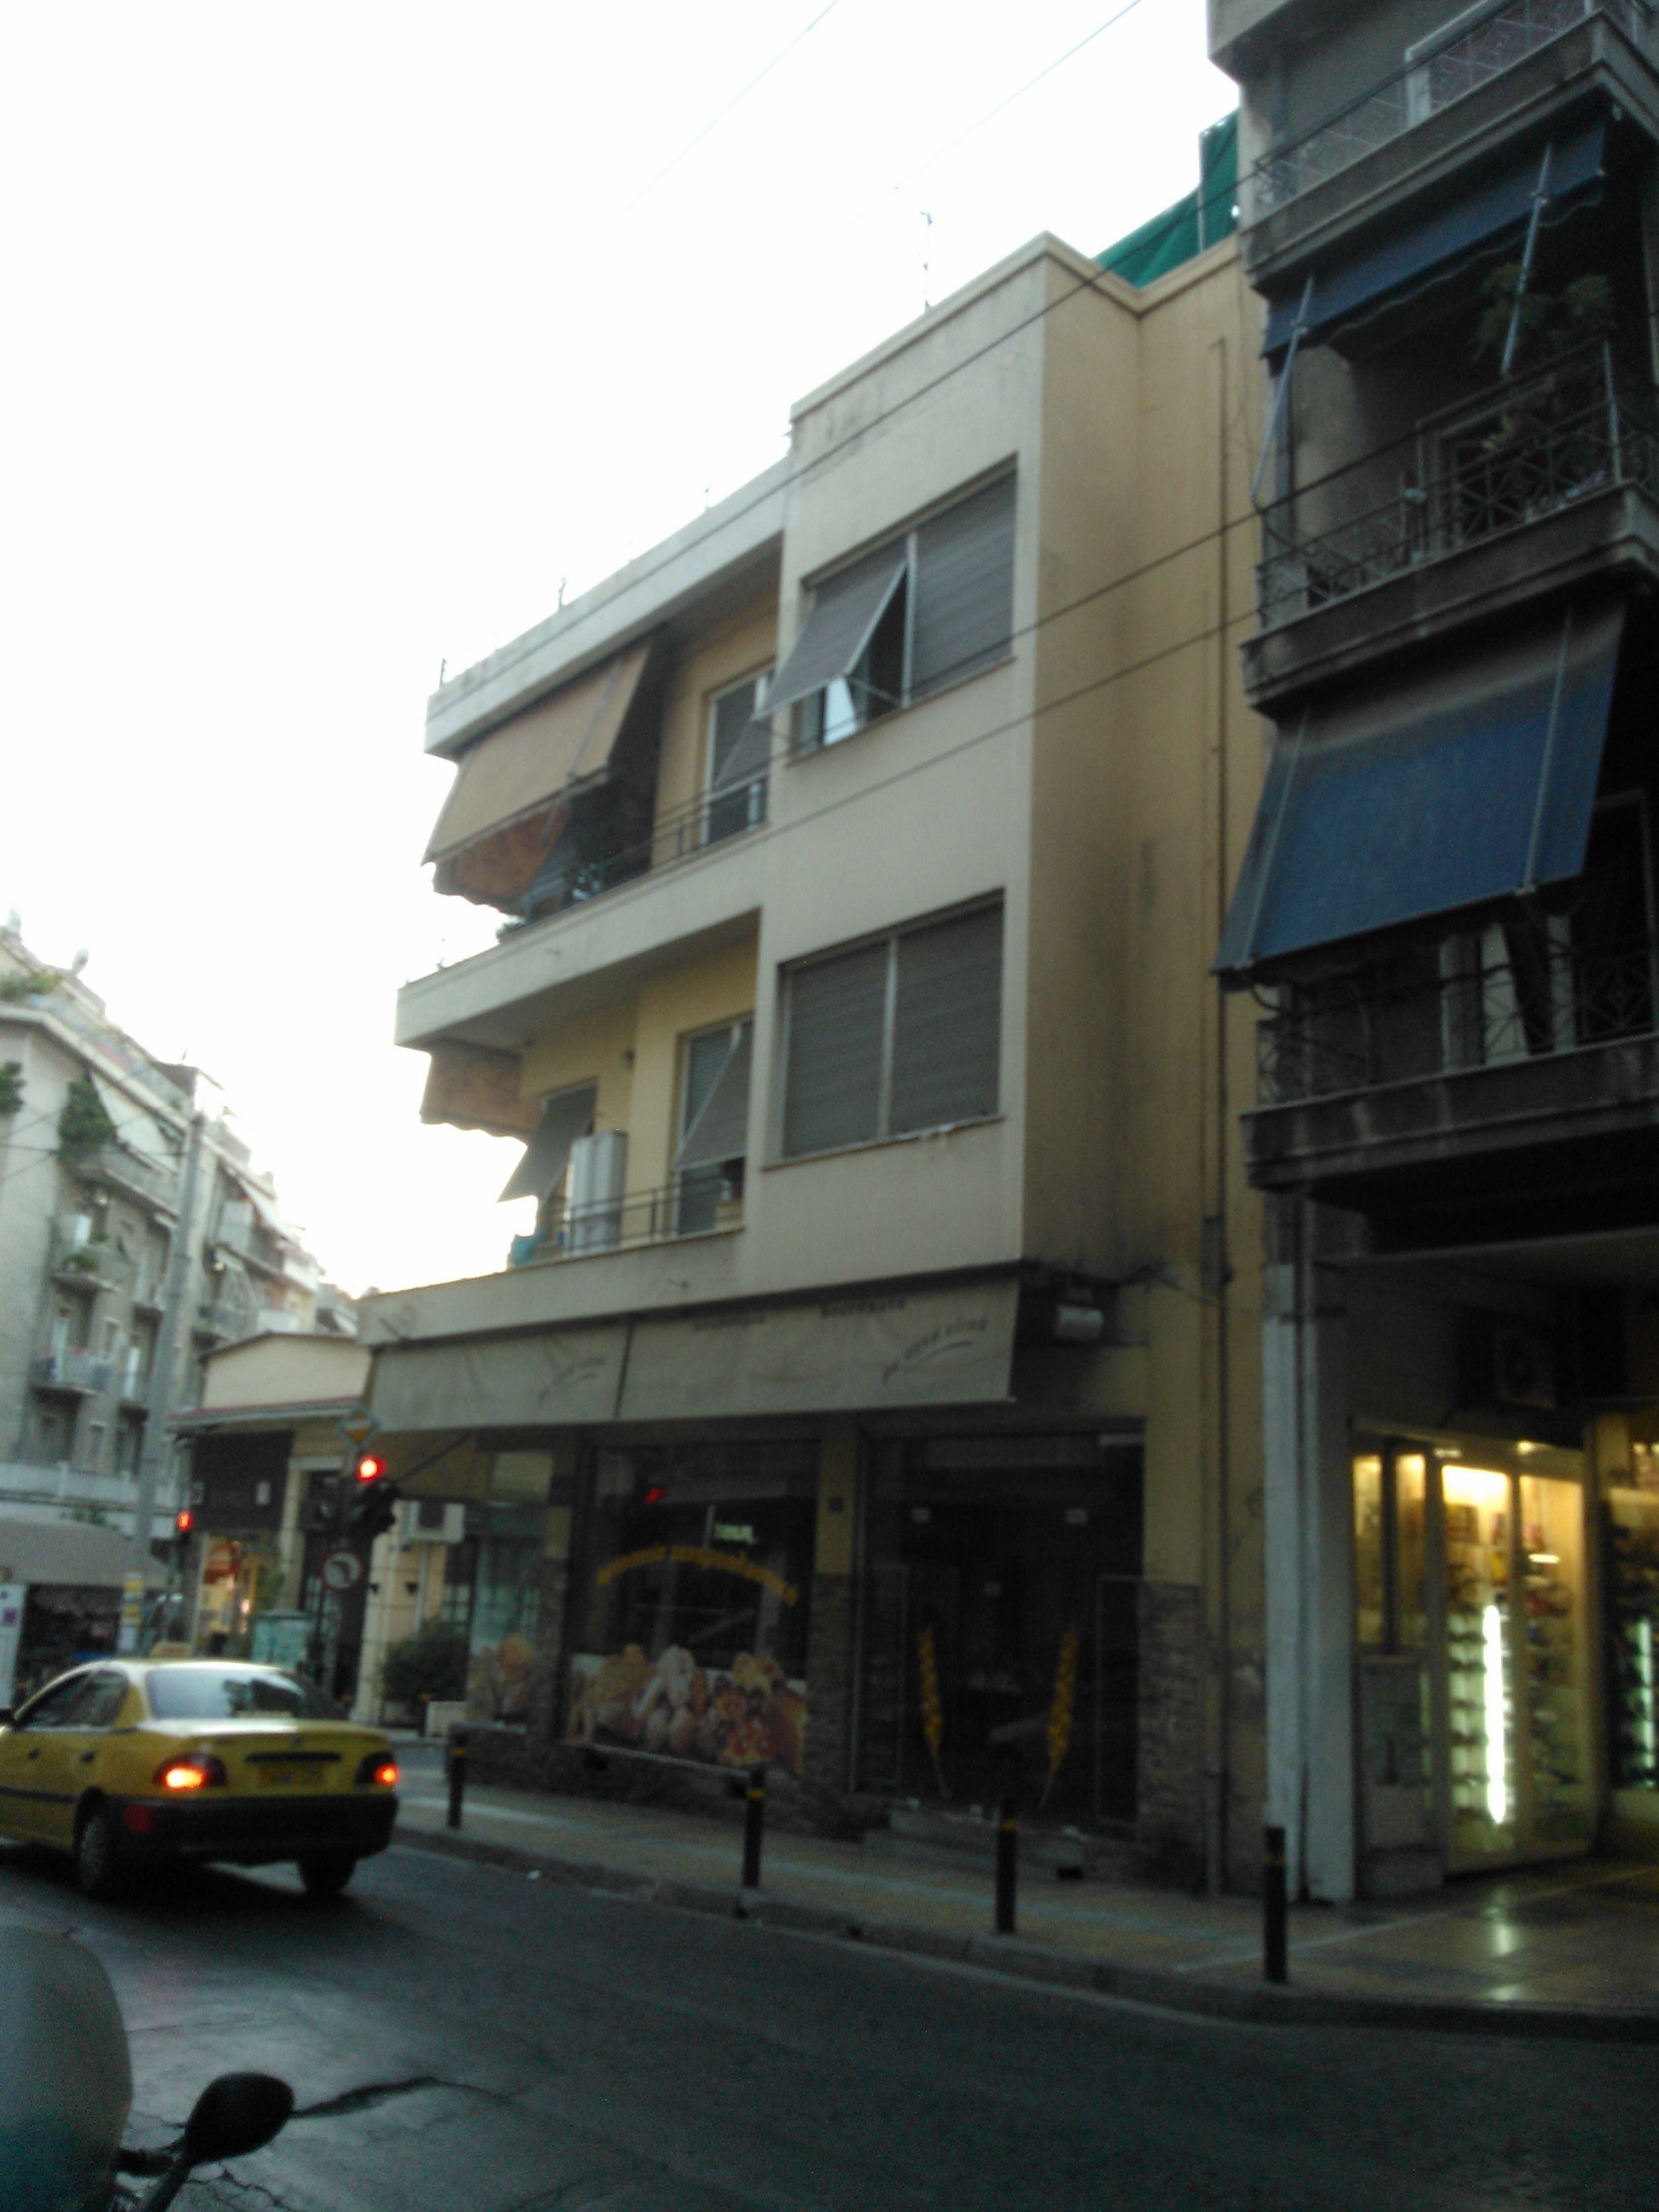 Facade of Kypseli Street